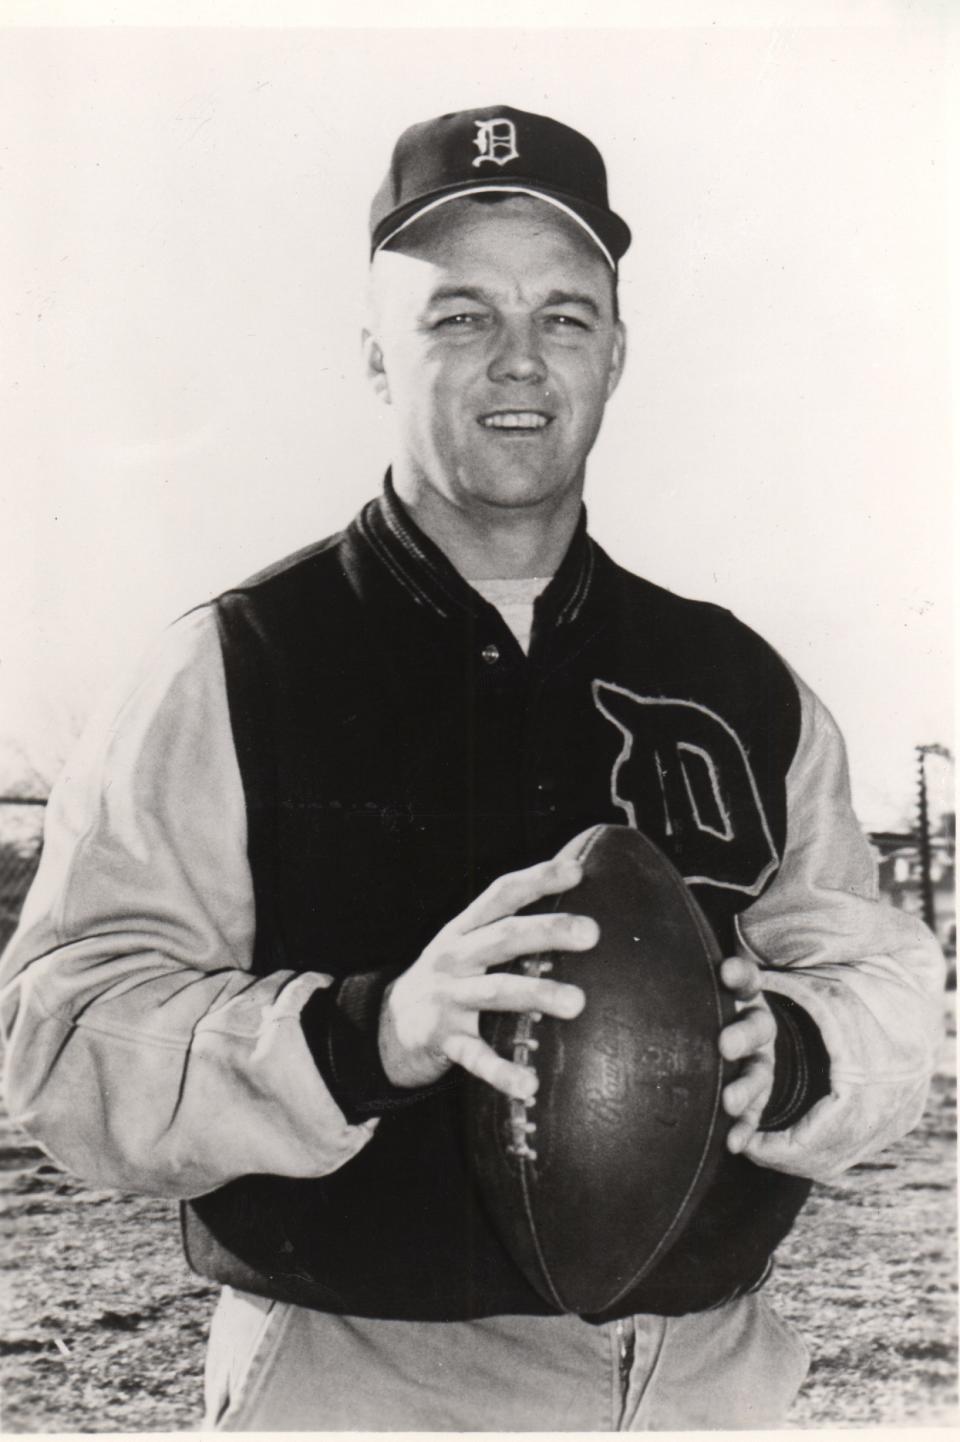 Delaware coach Dave Nelson